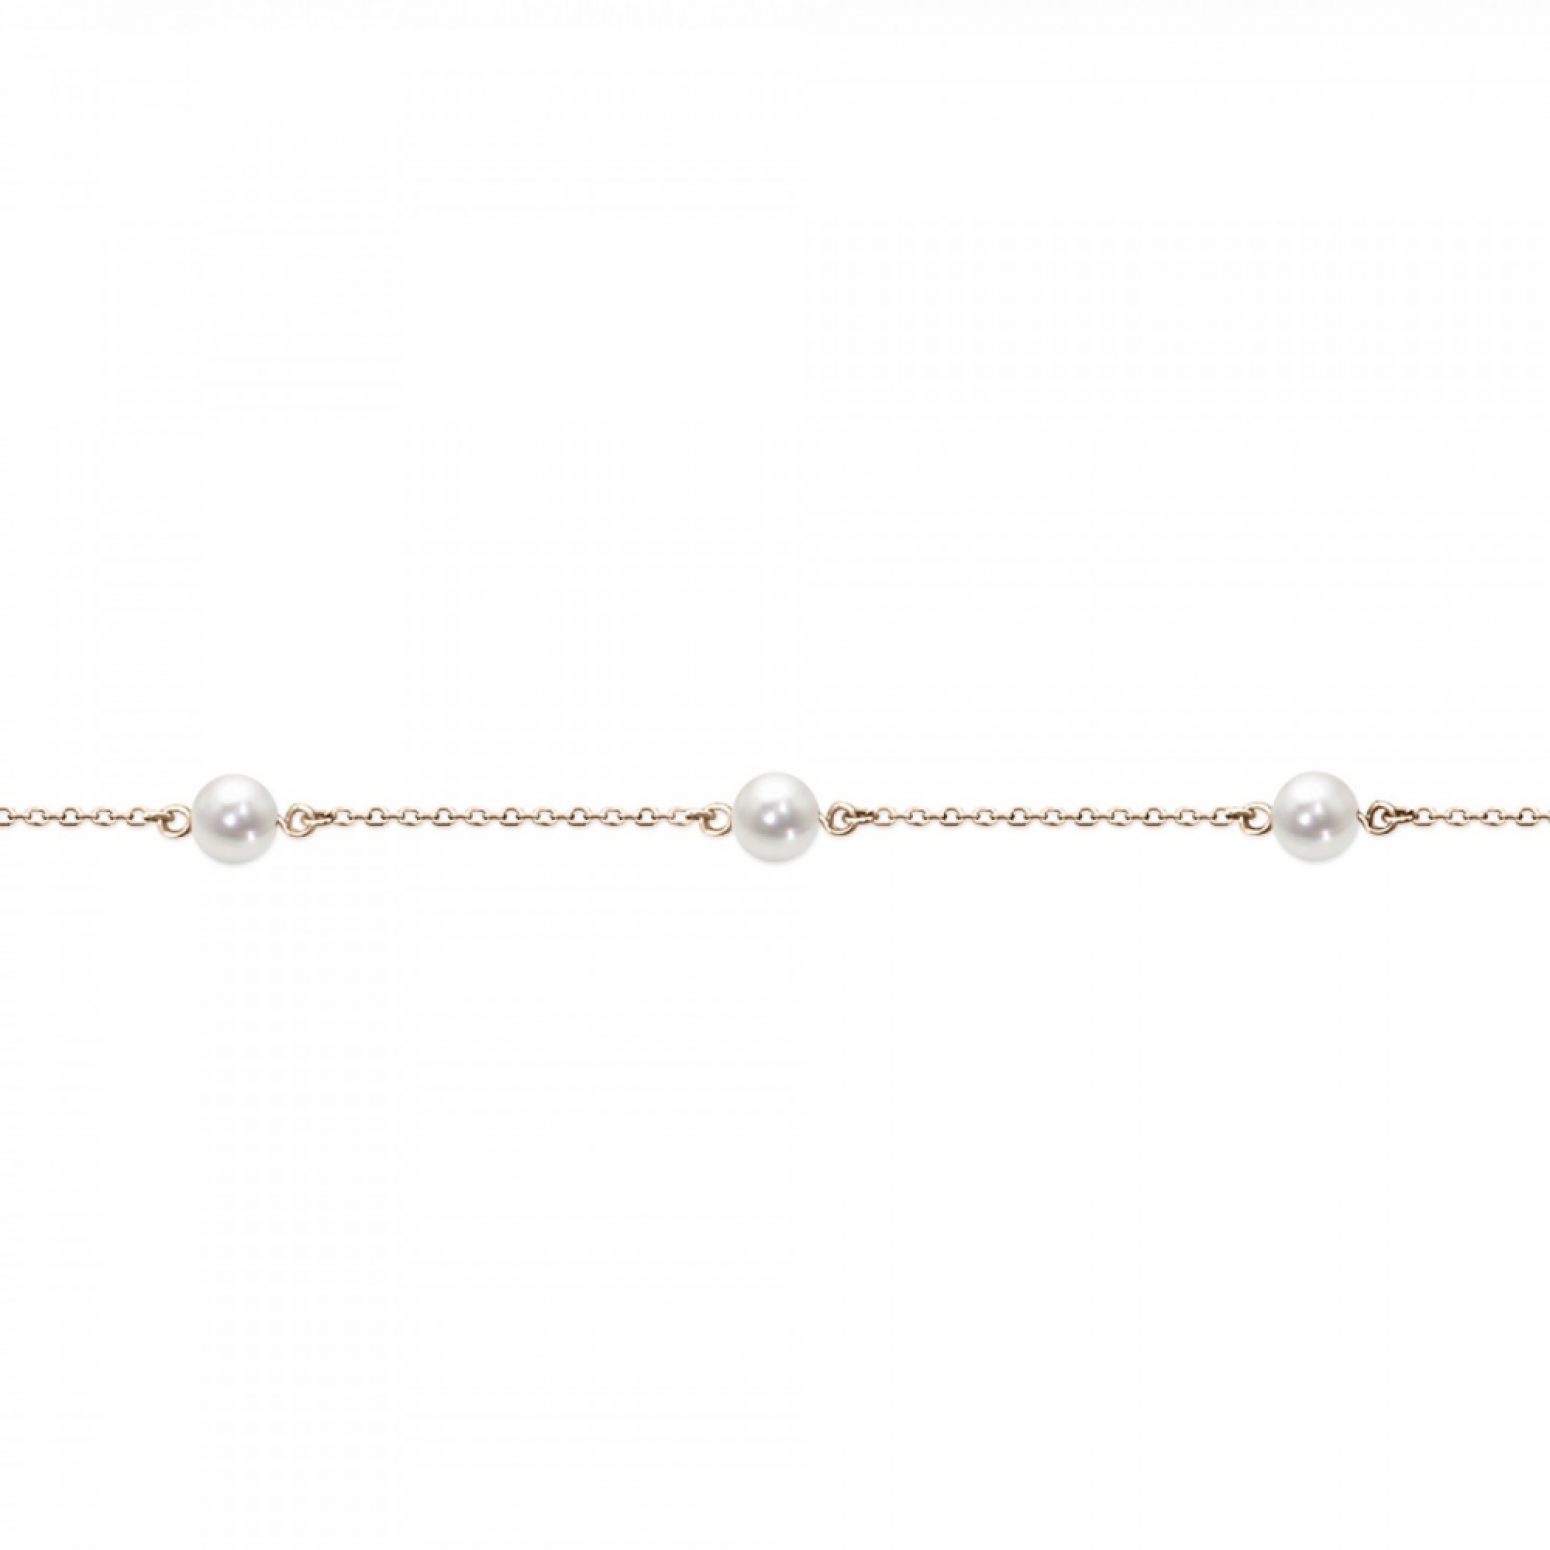 Bracelet, Κ14 pink gold with pearls br2153 BRACELETS Κοσμηματα - chrilia.gr